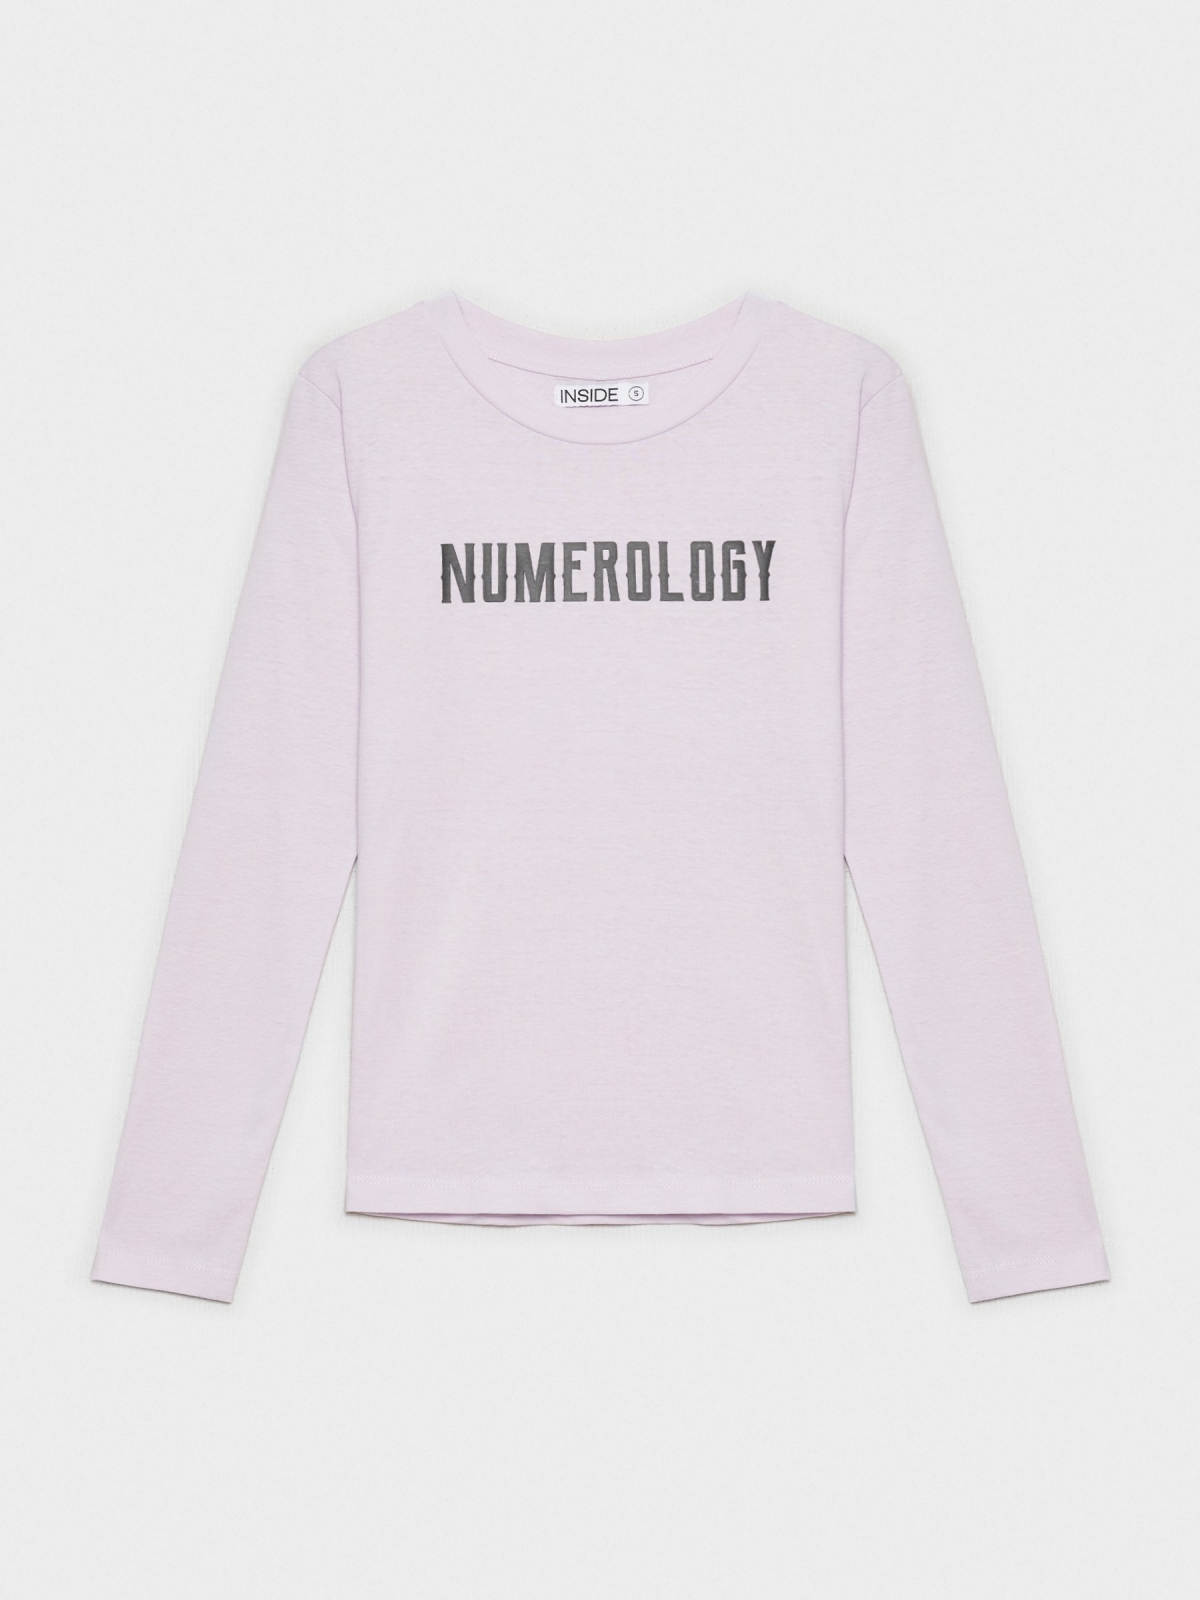  Numerology black T-shirt lilac